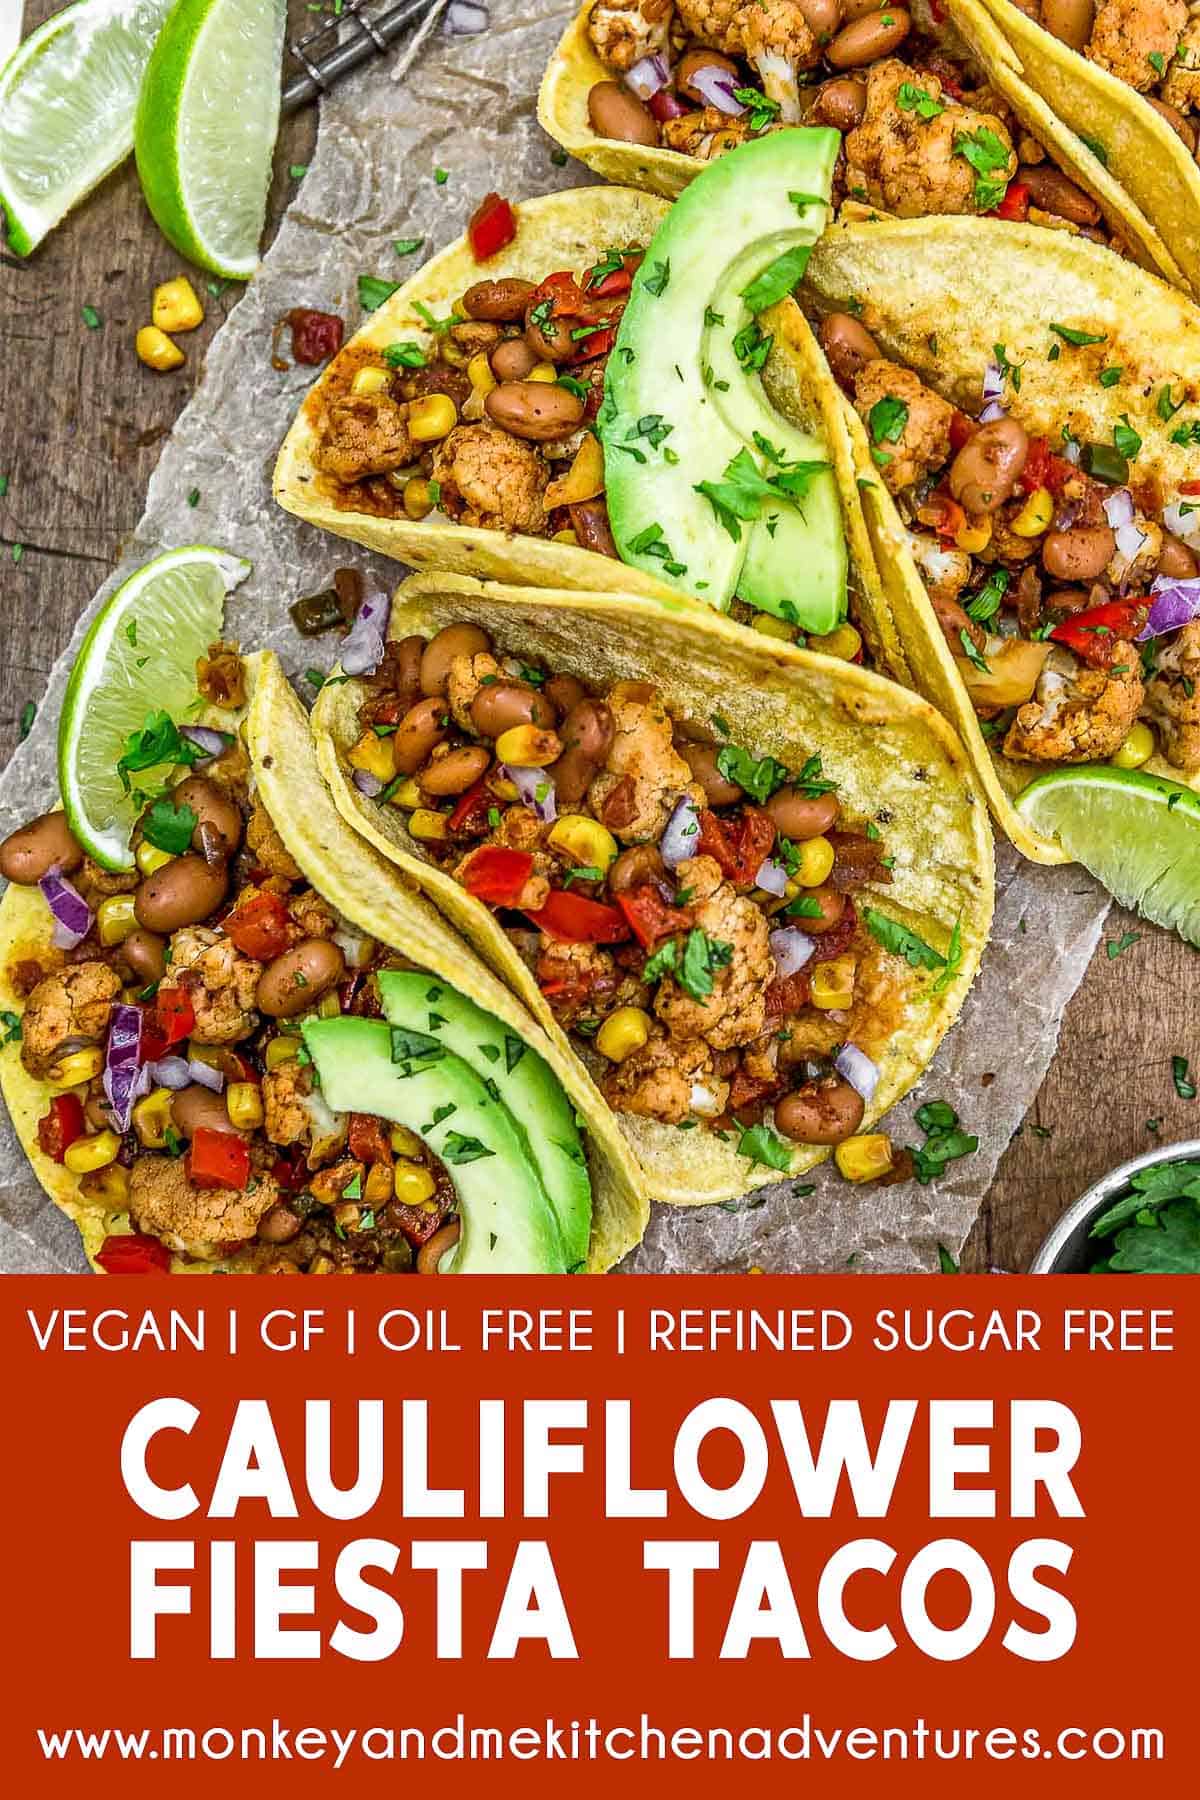 Cauliflower Fiesta Tacos with text description